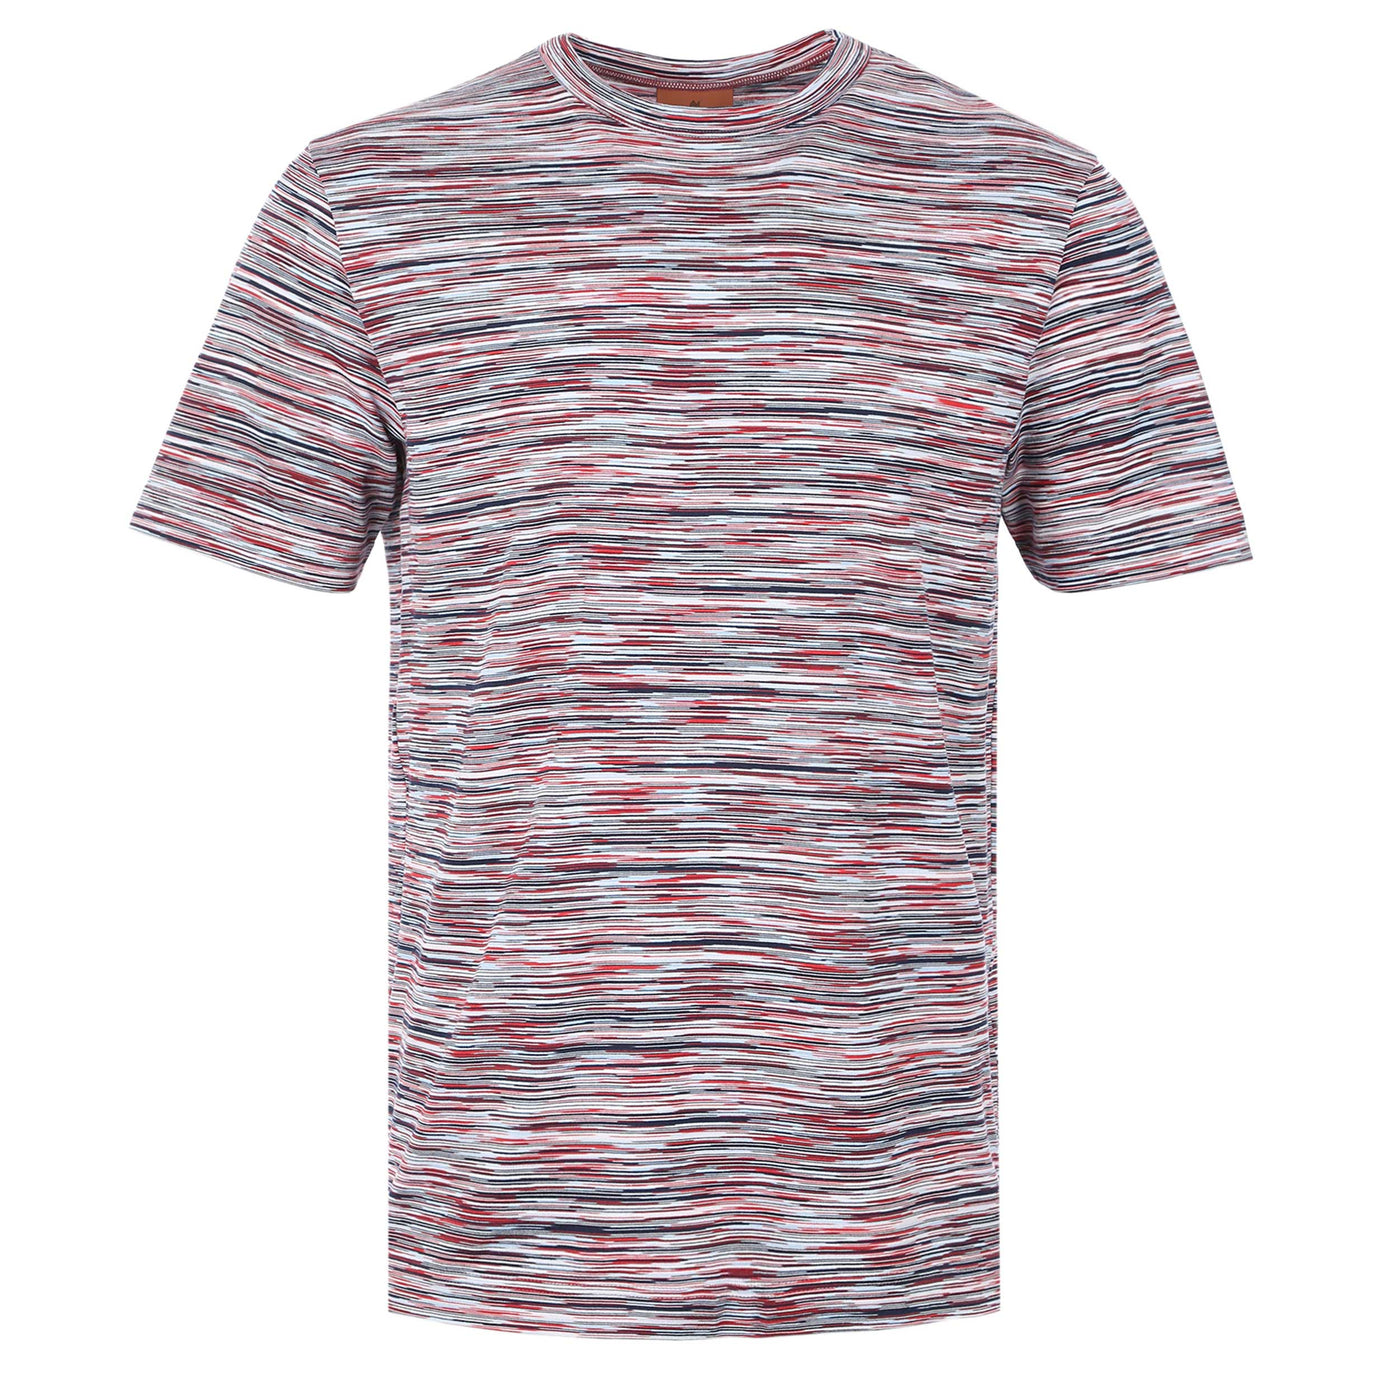 Missoni Space Dye Stripe T-Shirt in Navy, Red & Blue